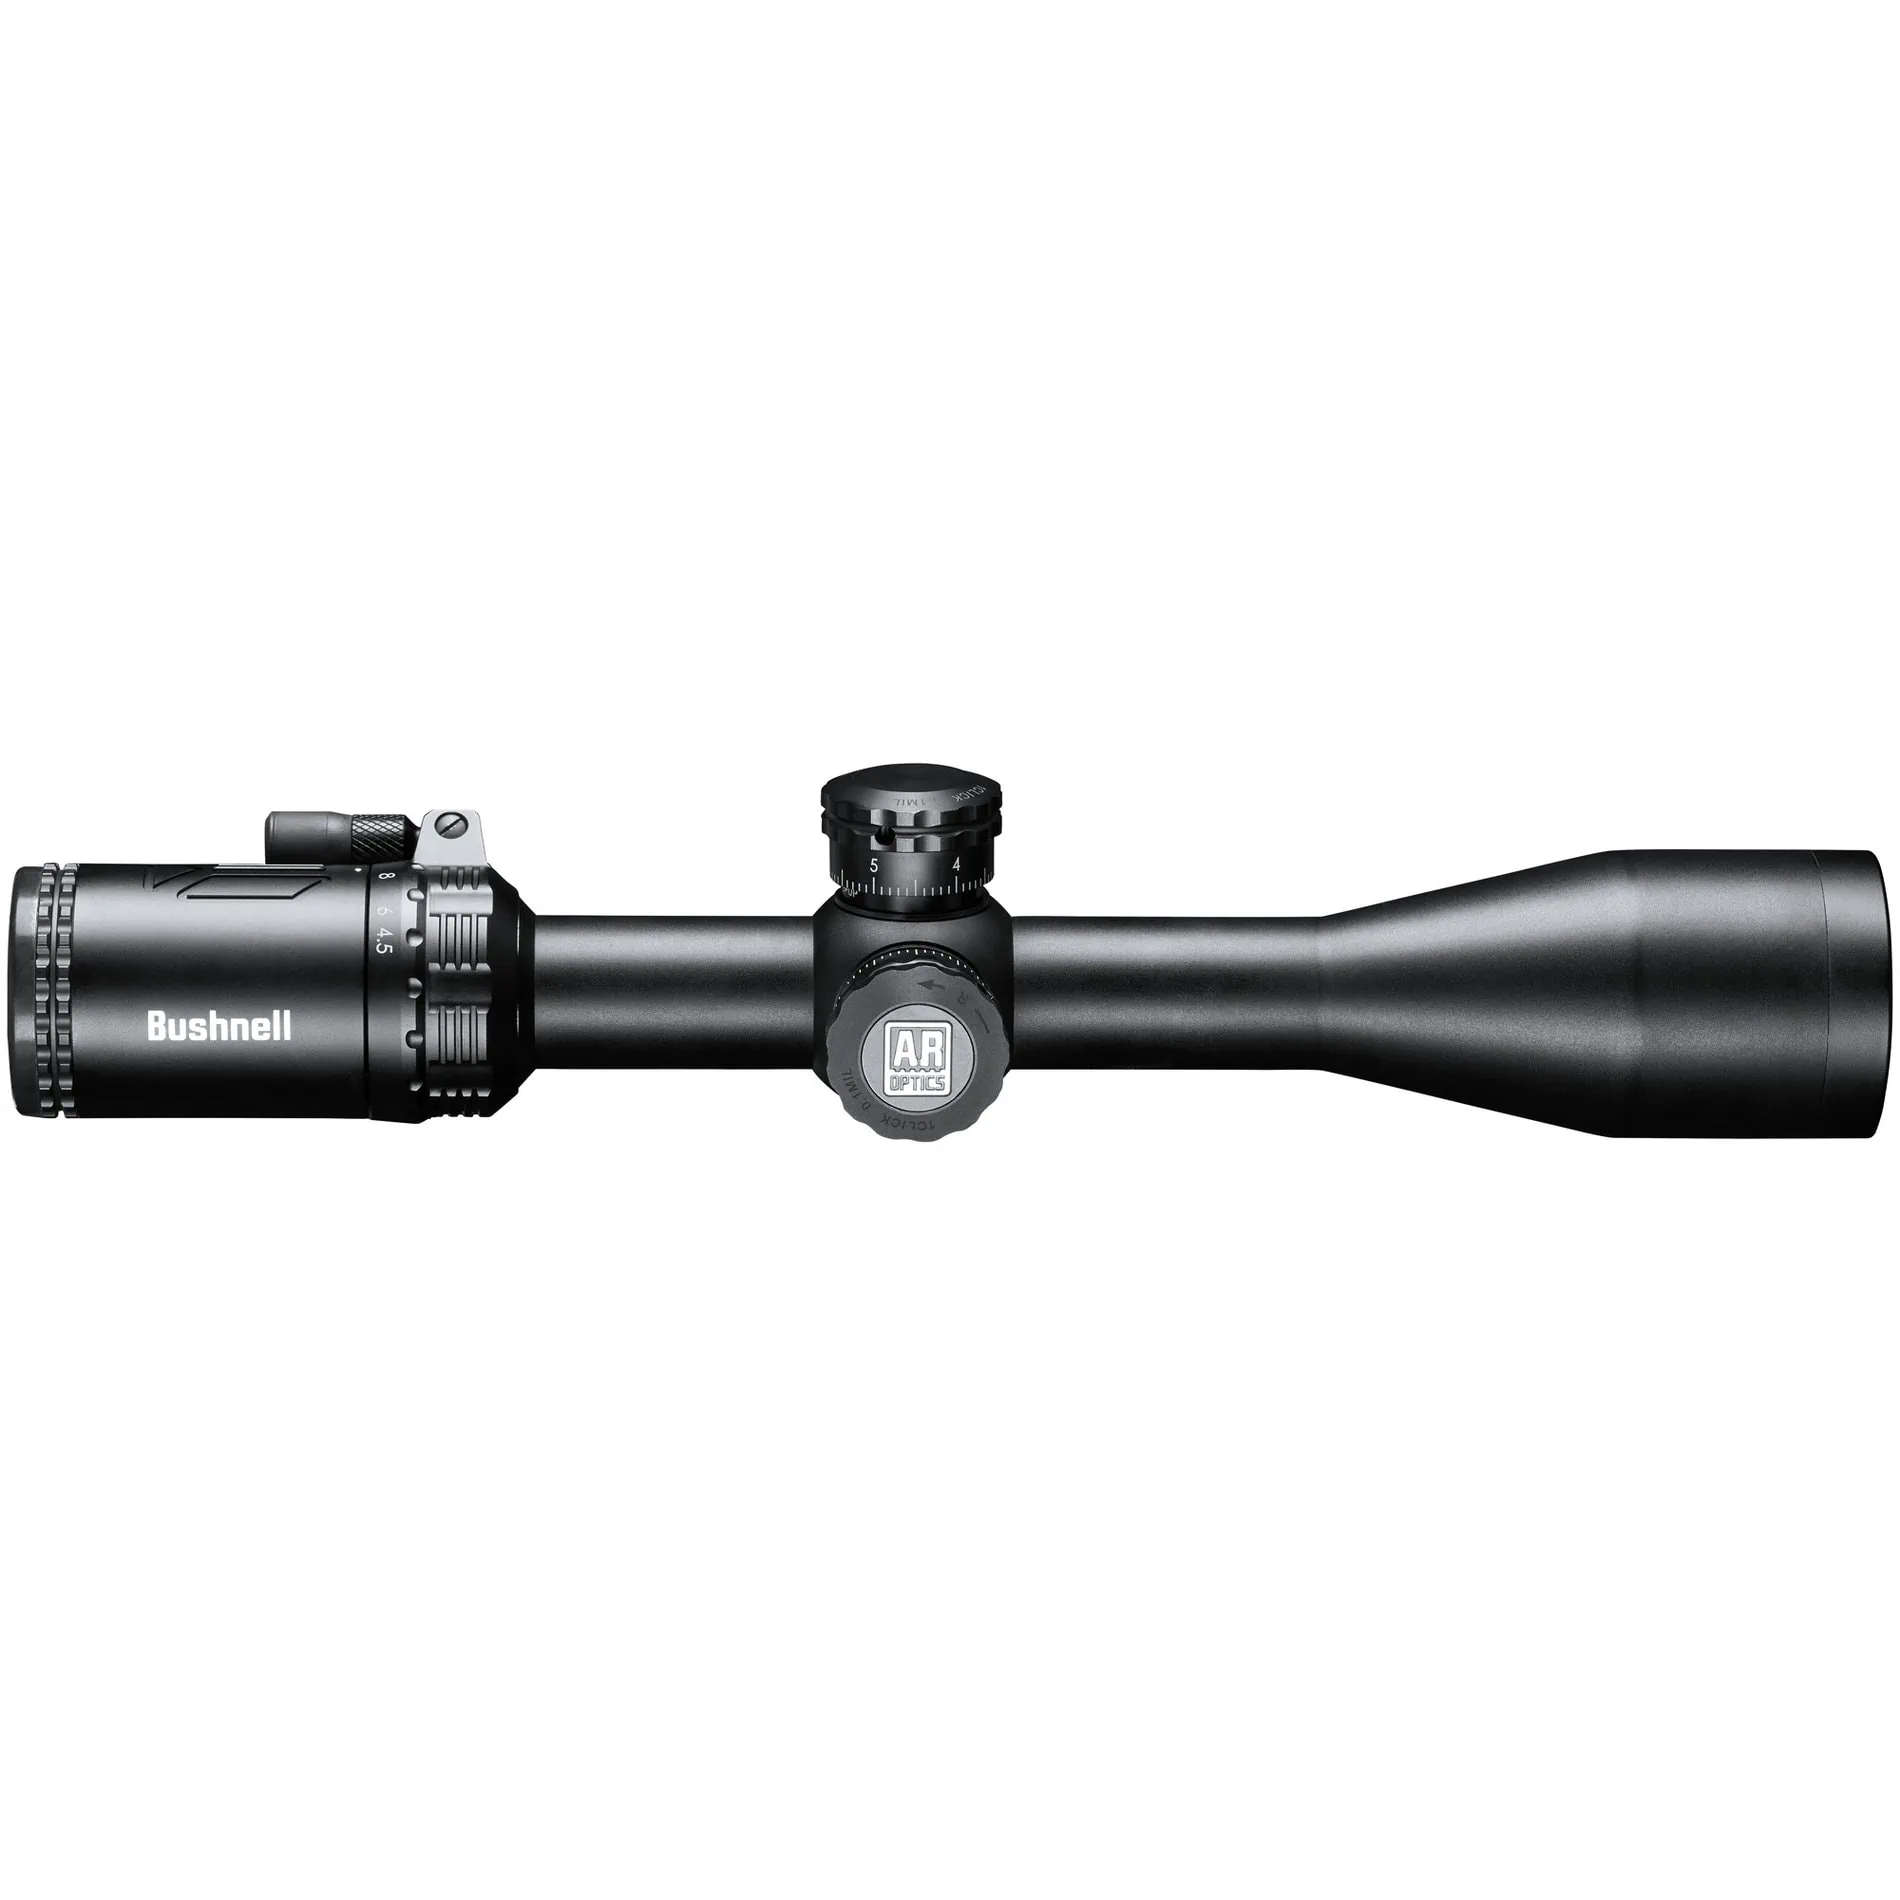 Bushnell AR Optics 4.5-18x40 Illuminated BDC Rifle Scope with Wind Hold Reticle